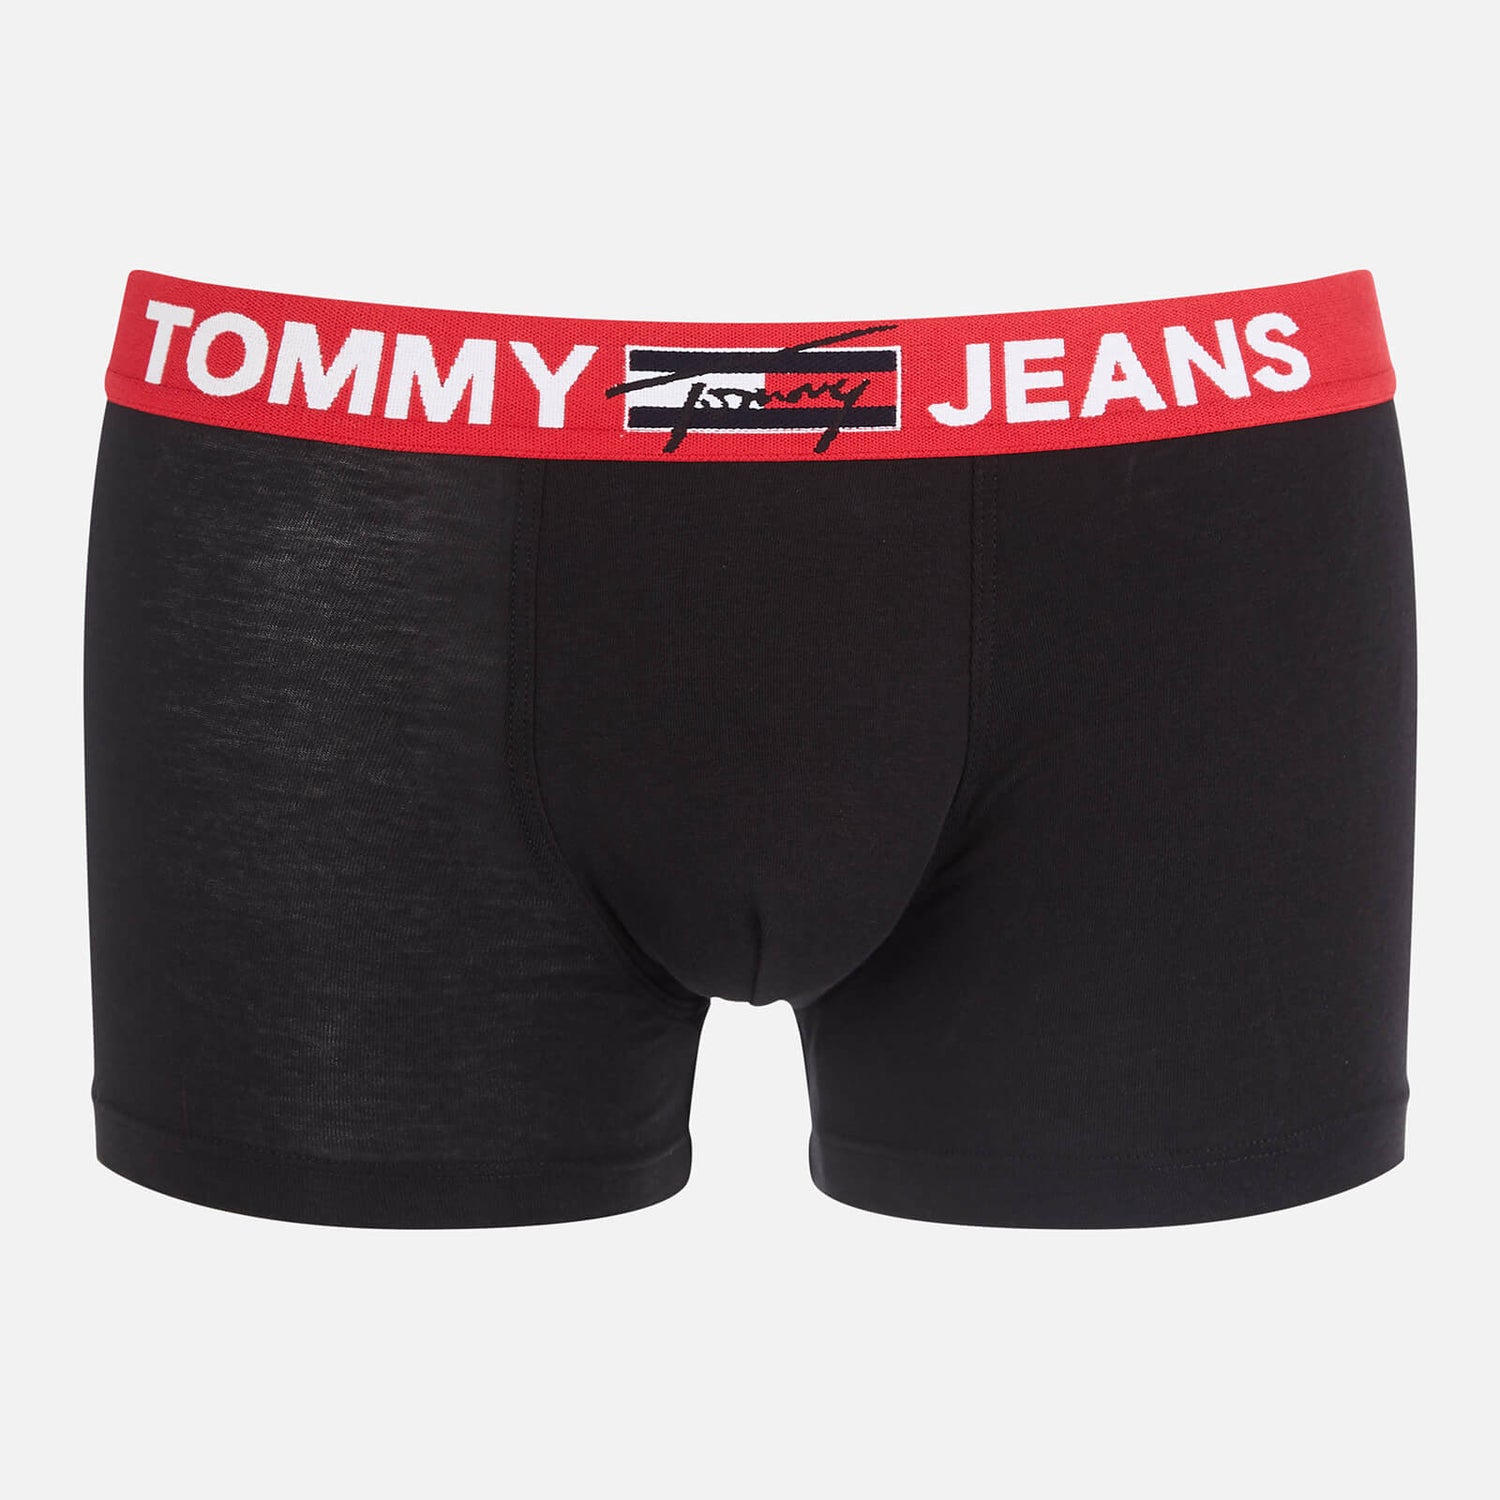 Tommy Jeans Men's Trunks - Black